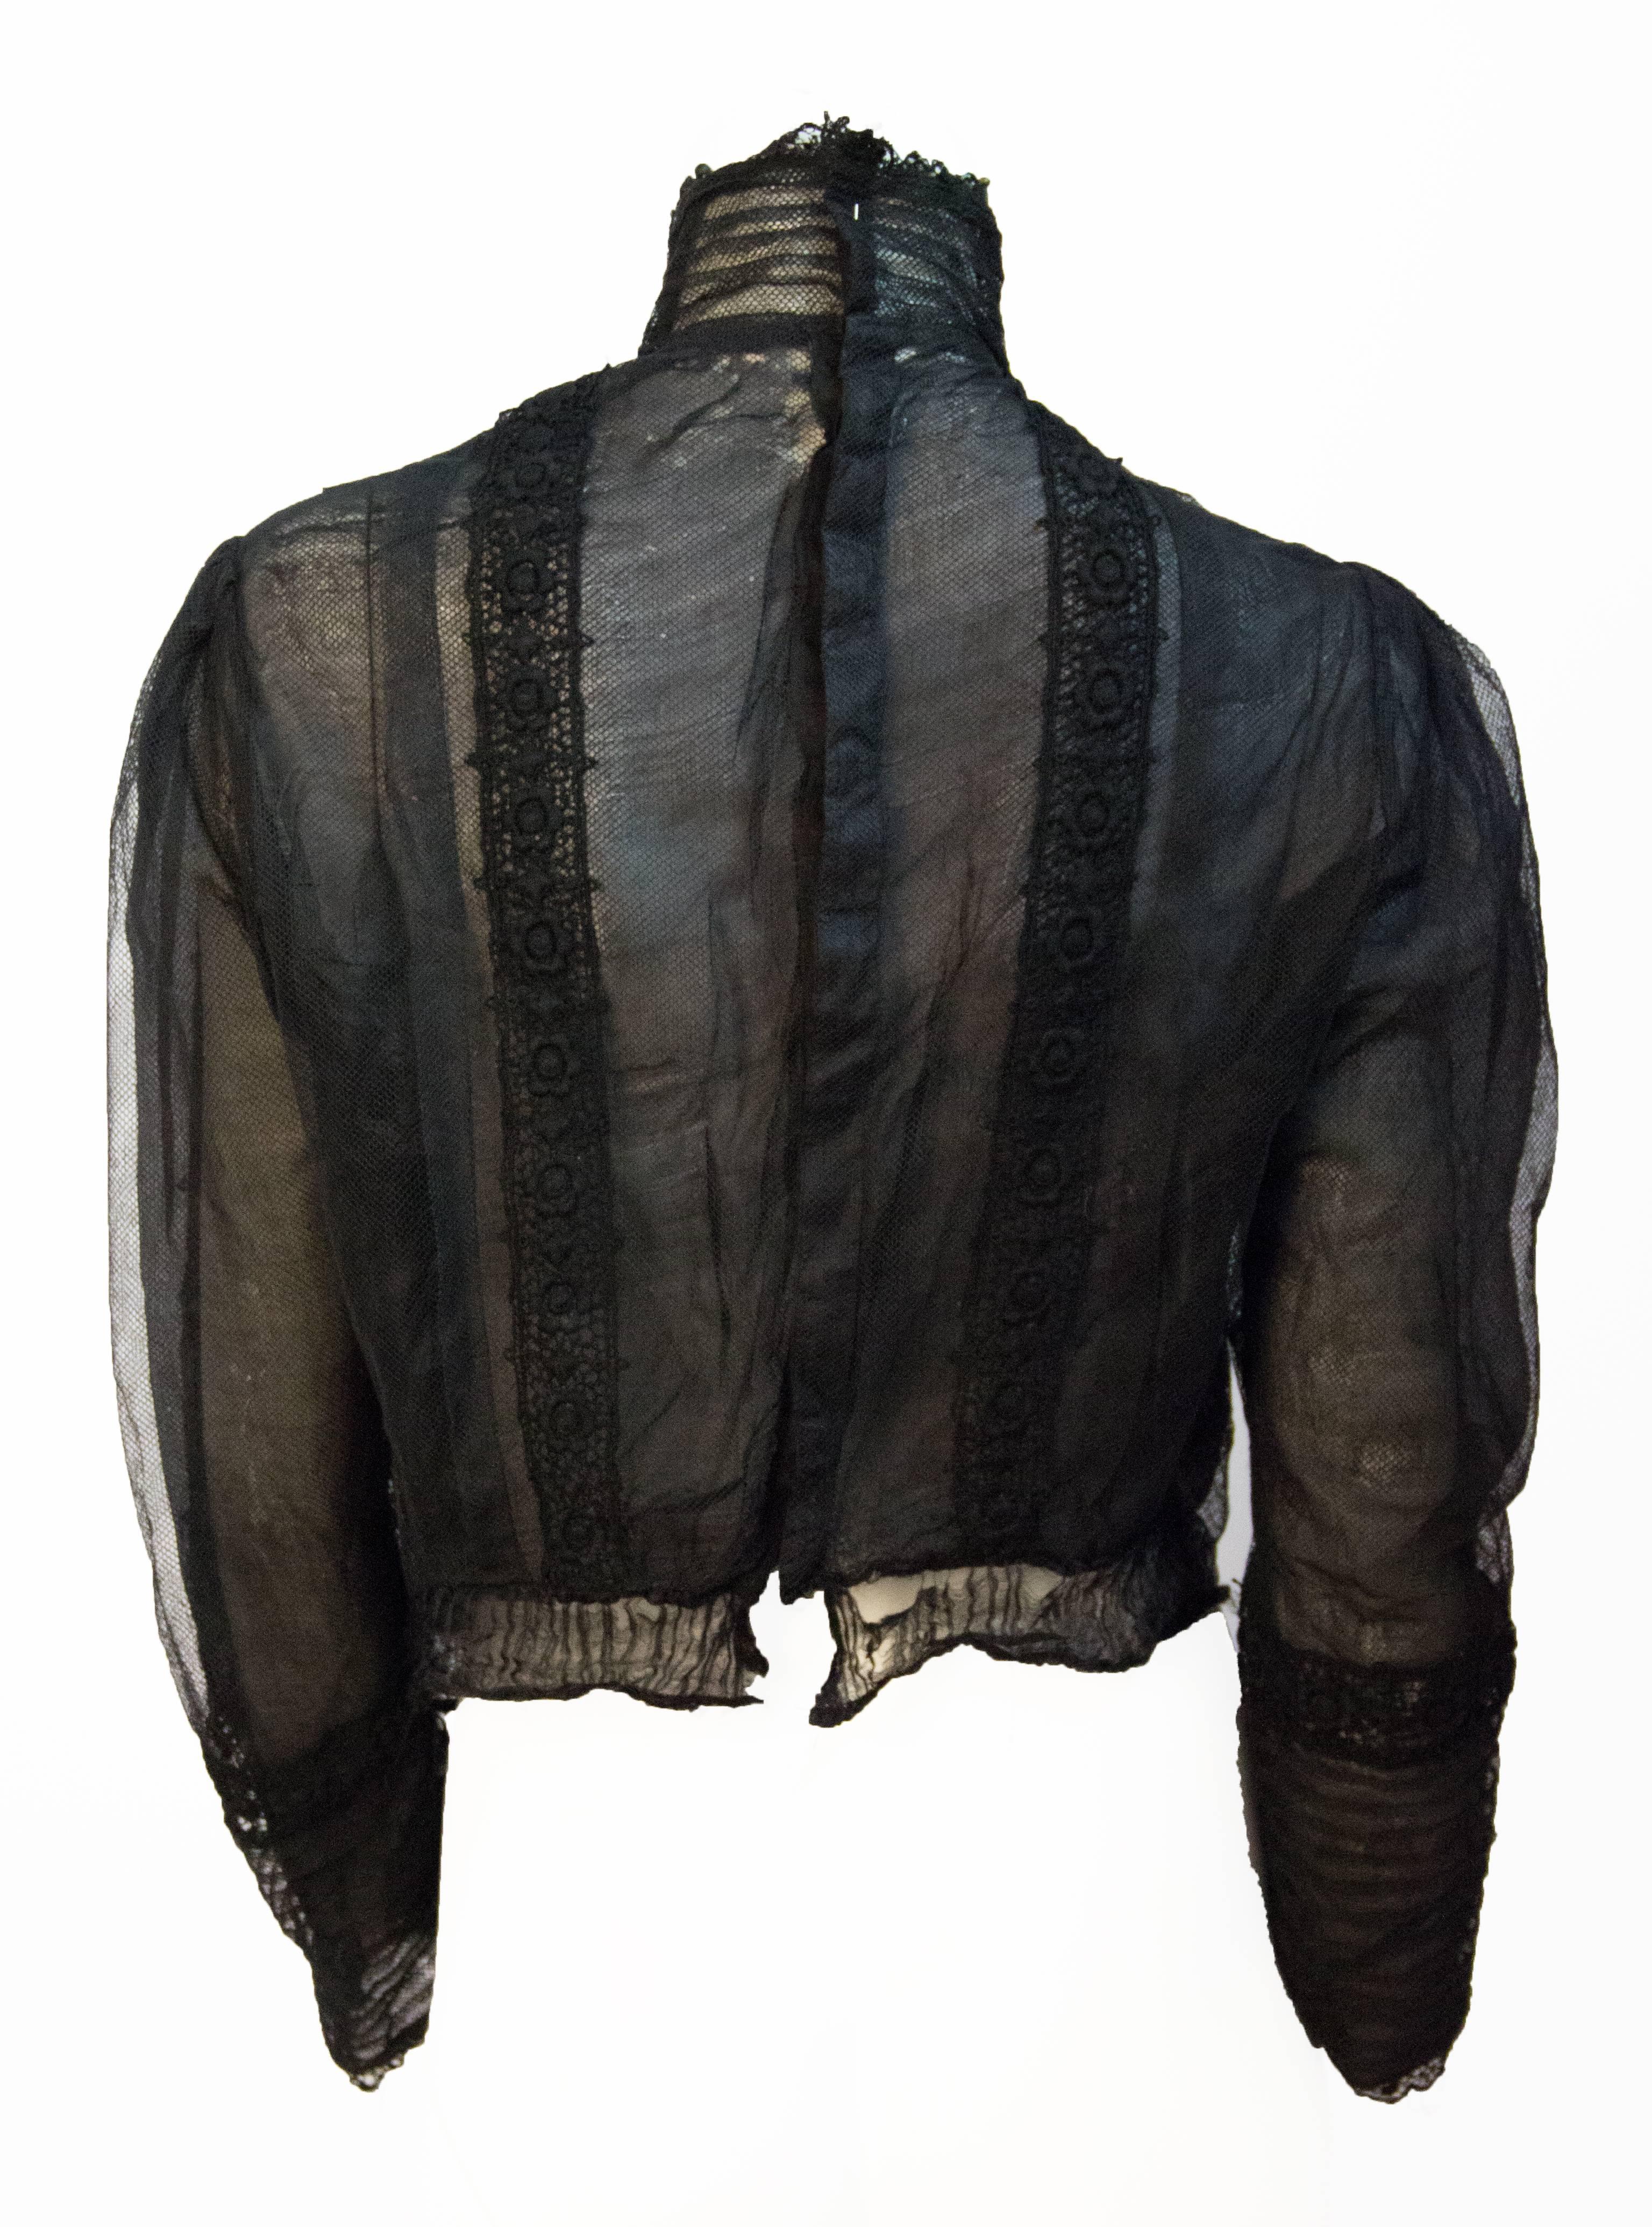 Edwardian black mesh embroidered blouse. Slight pigeon chest. Lace Trim. Black jet bead embellishments. Metal collar stays. 